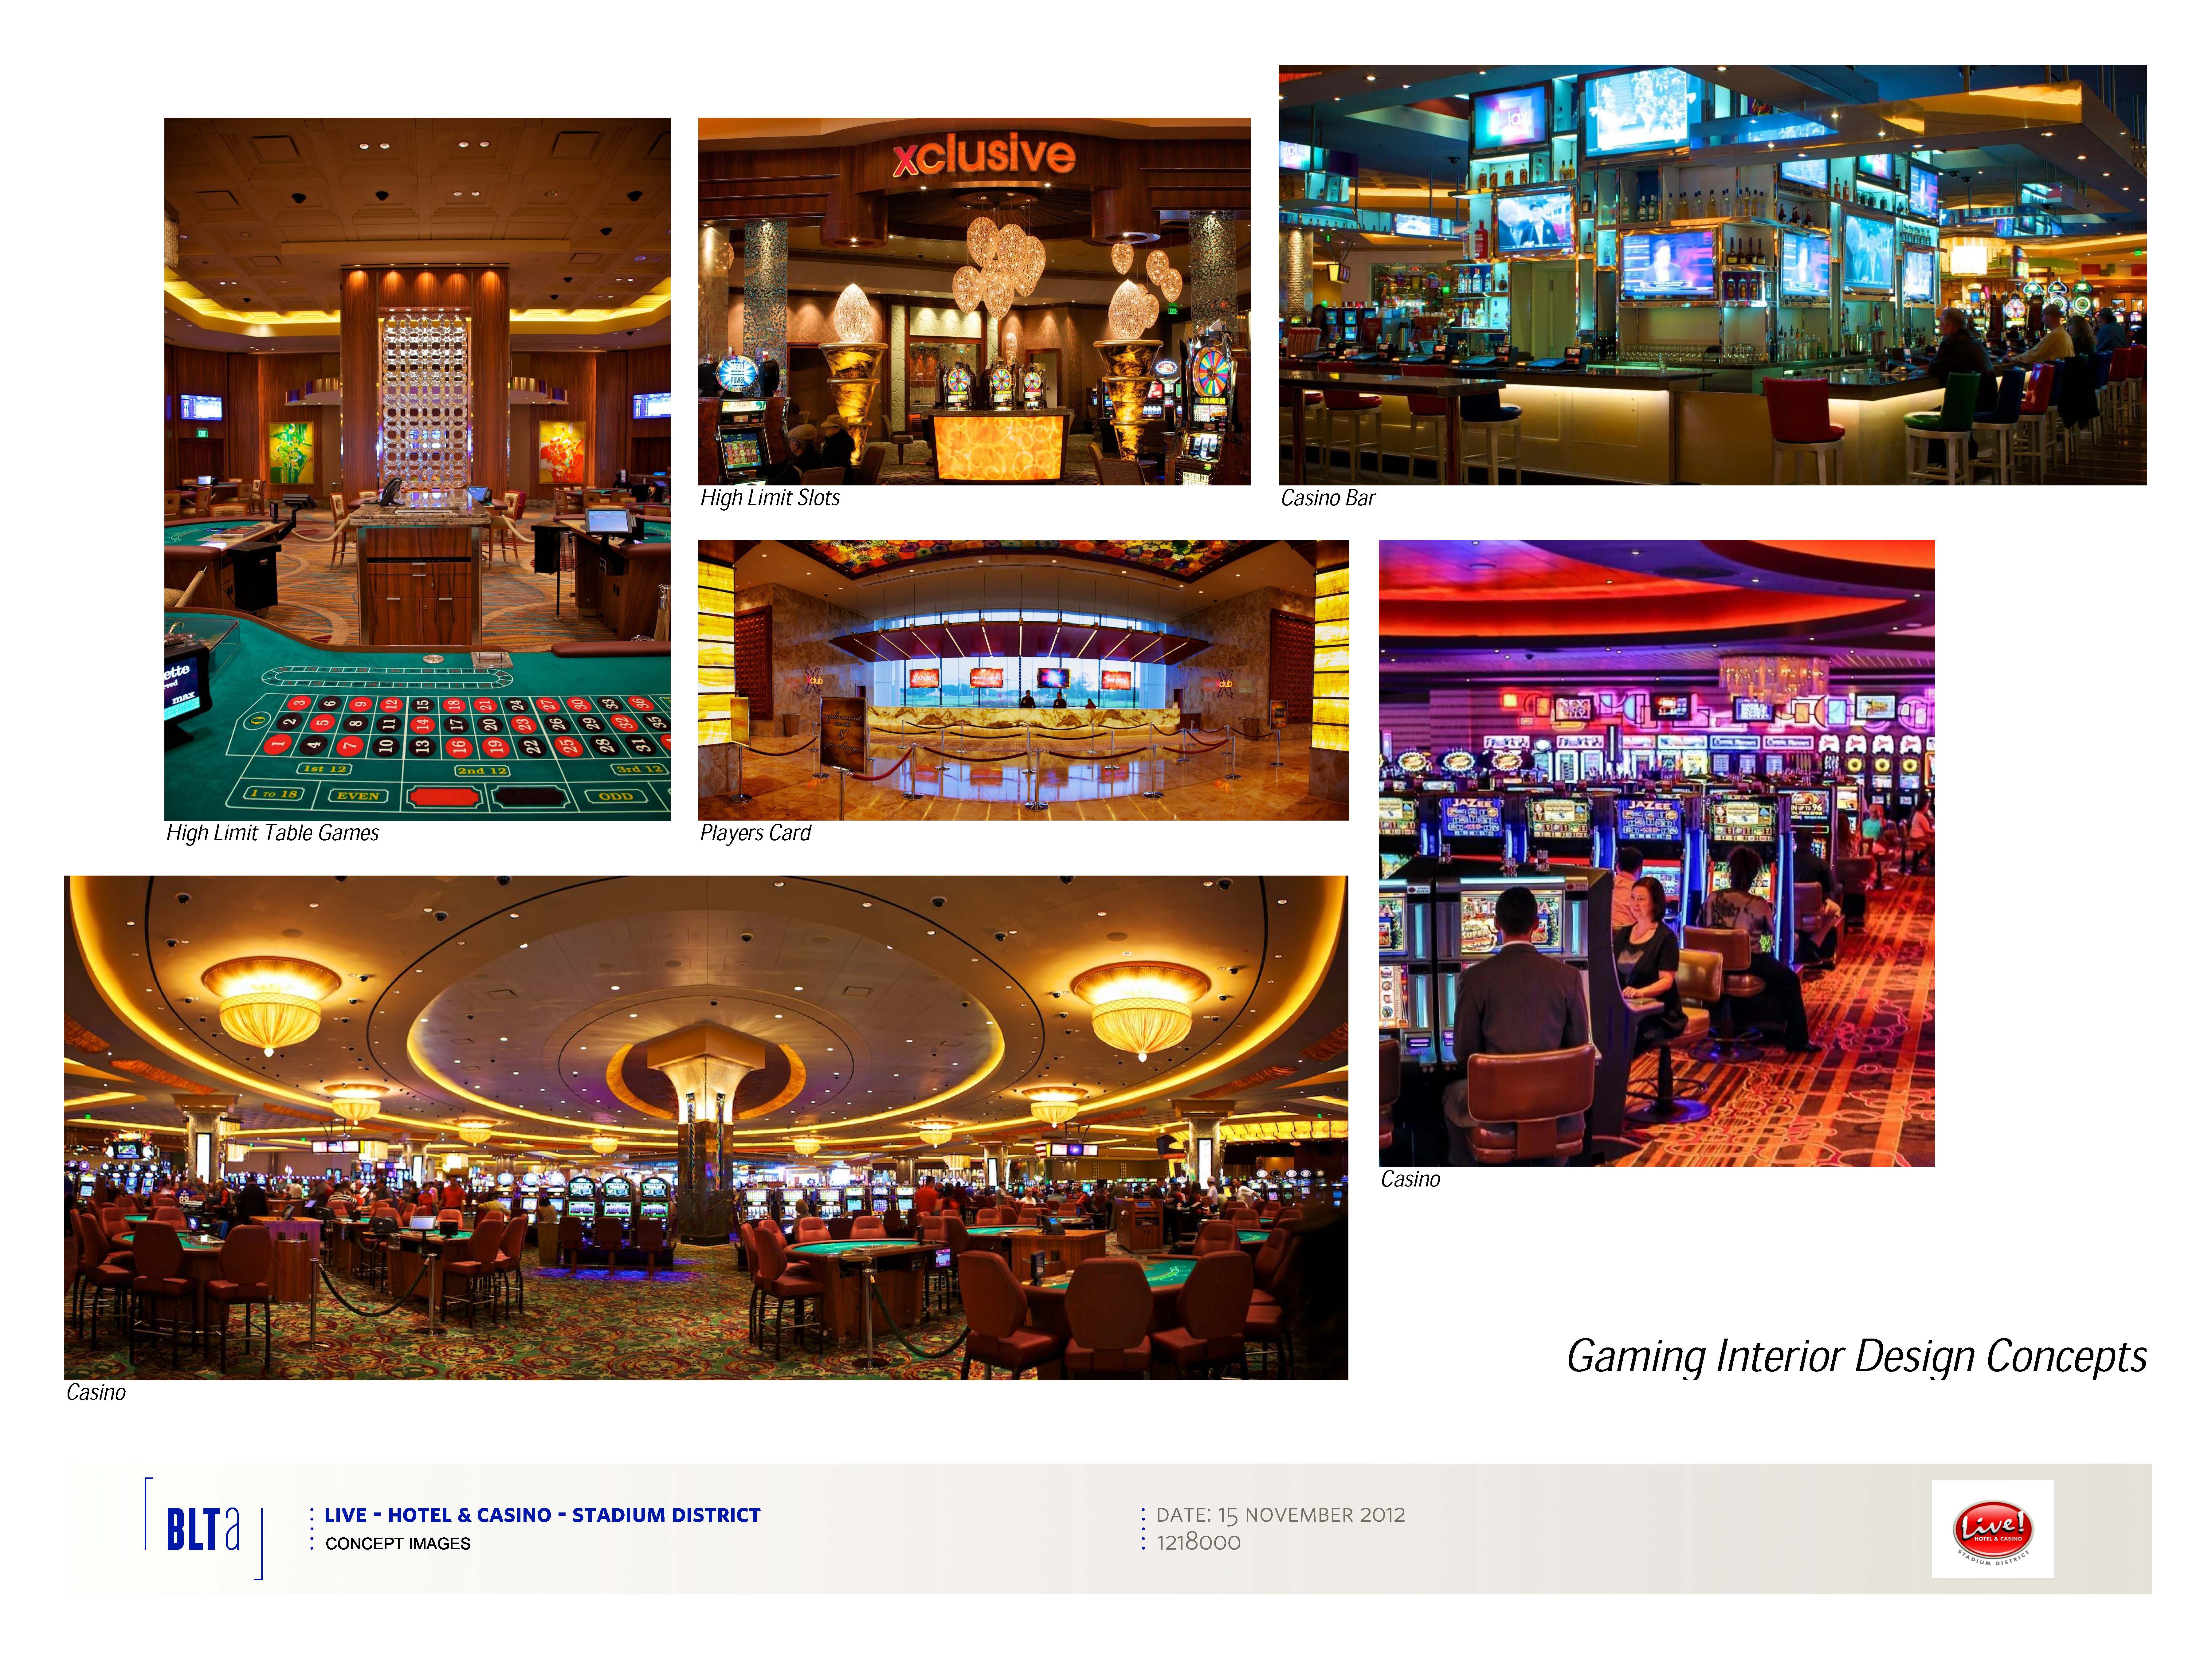 Live! Casino gaming interior design concepts